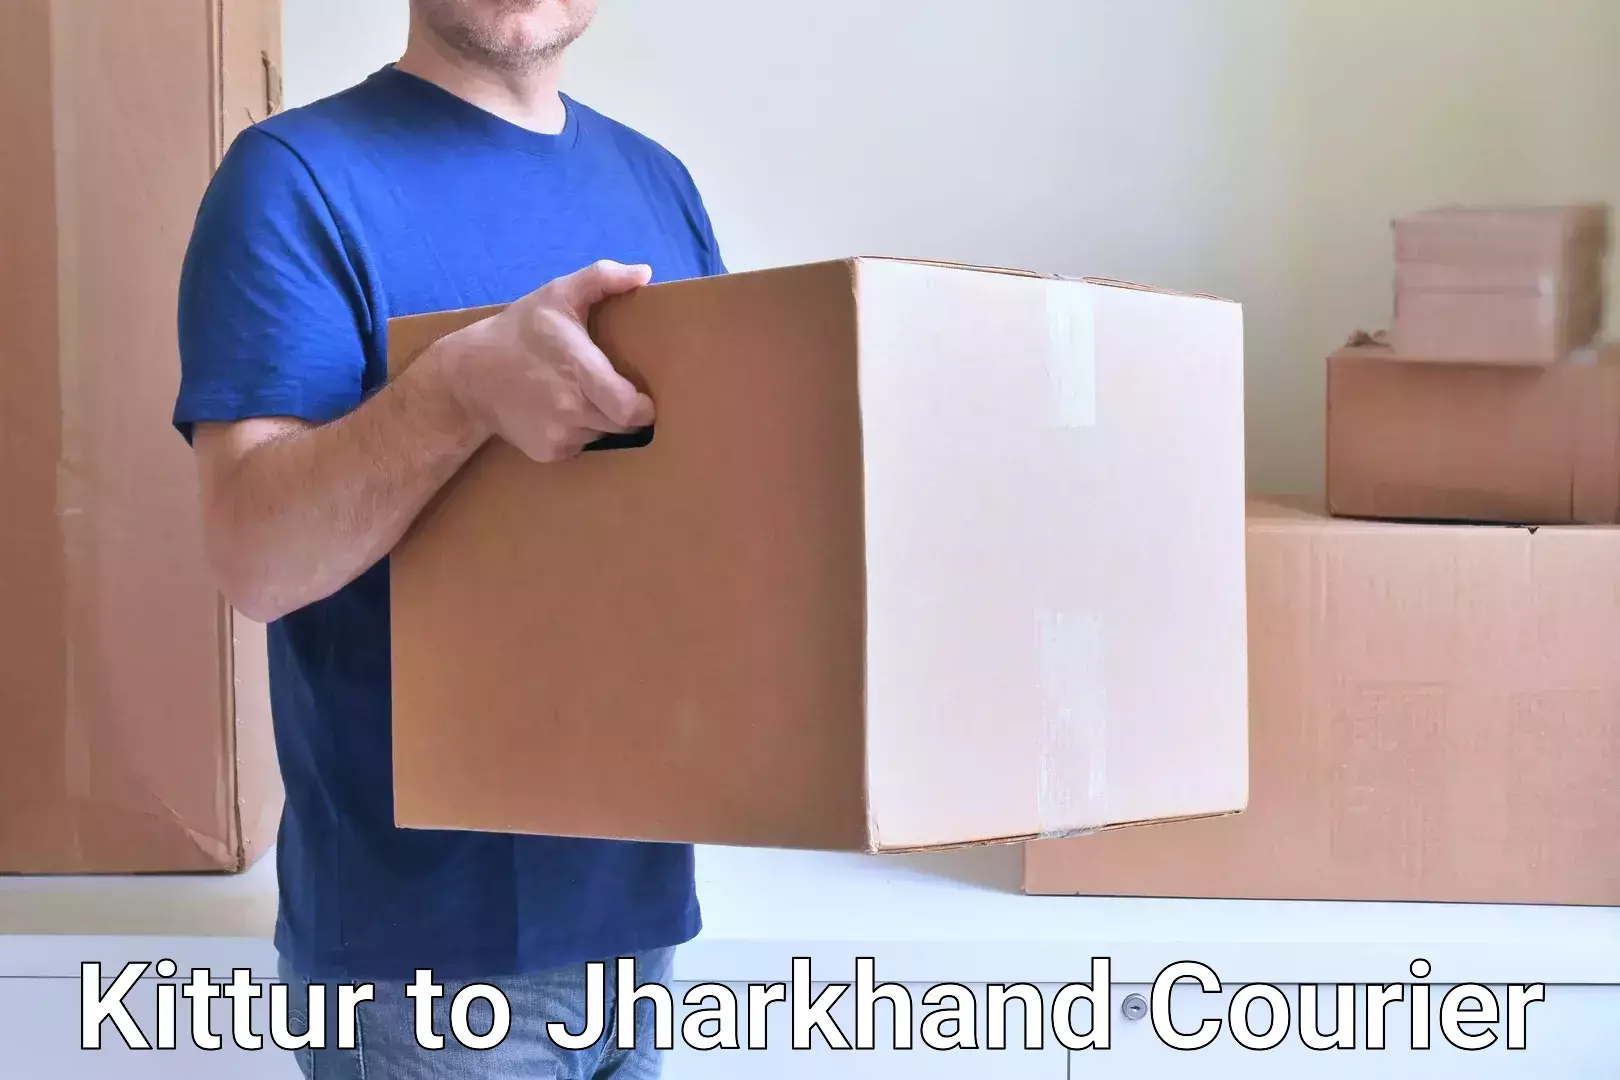 Logistics service provider Kittur to Jharkhand